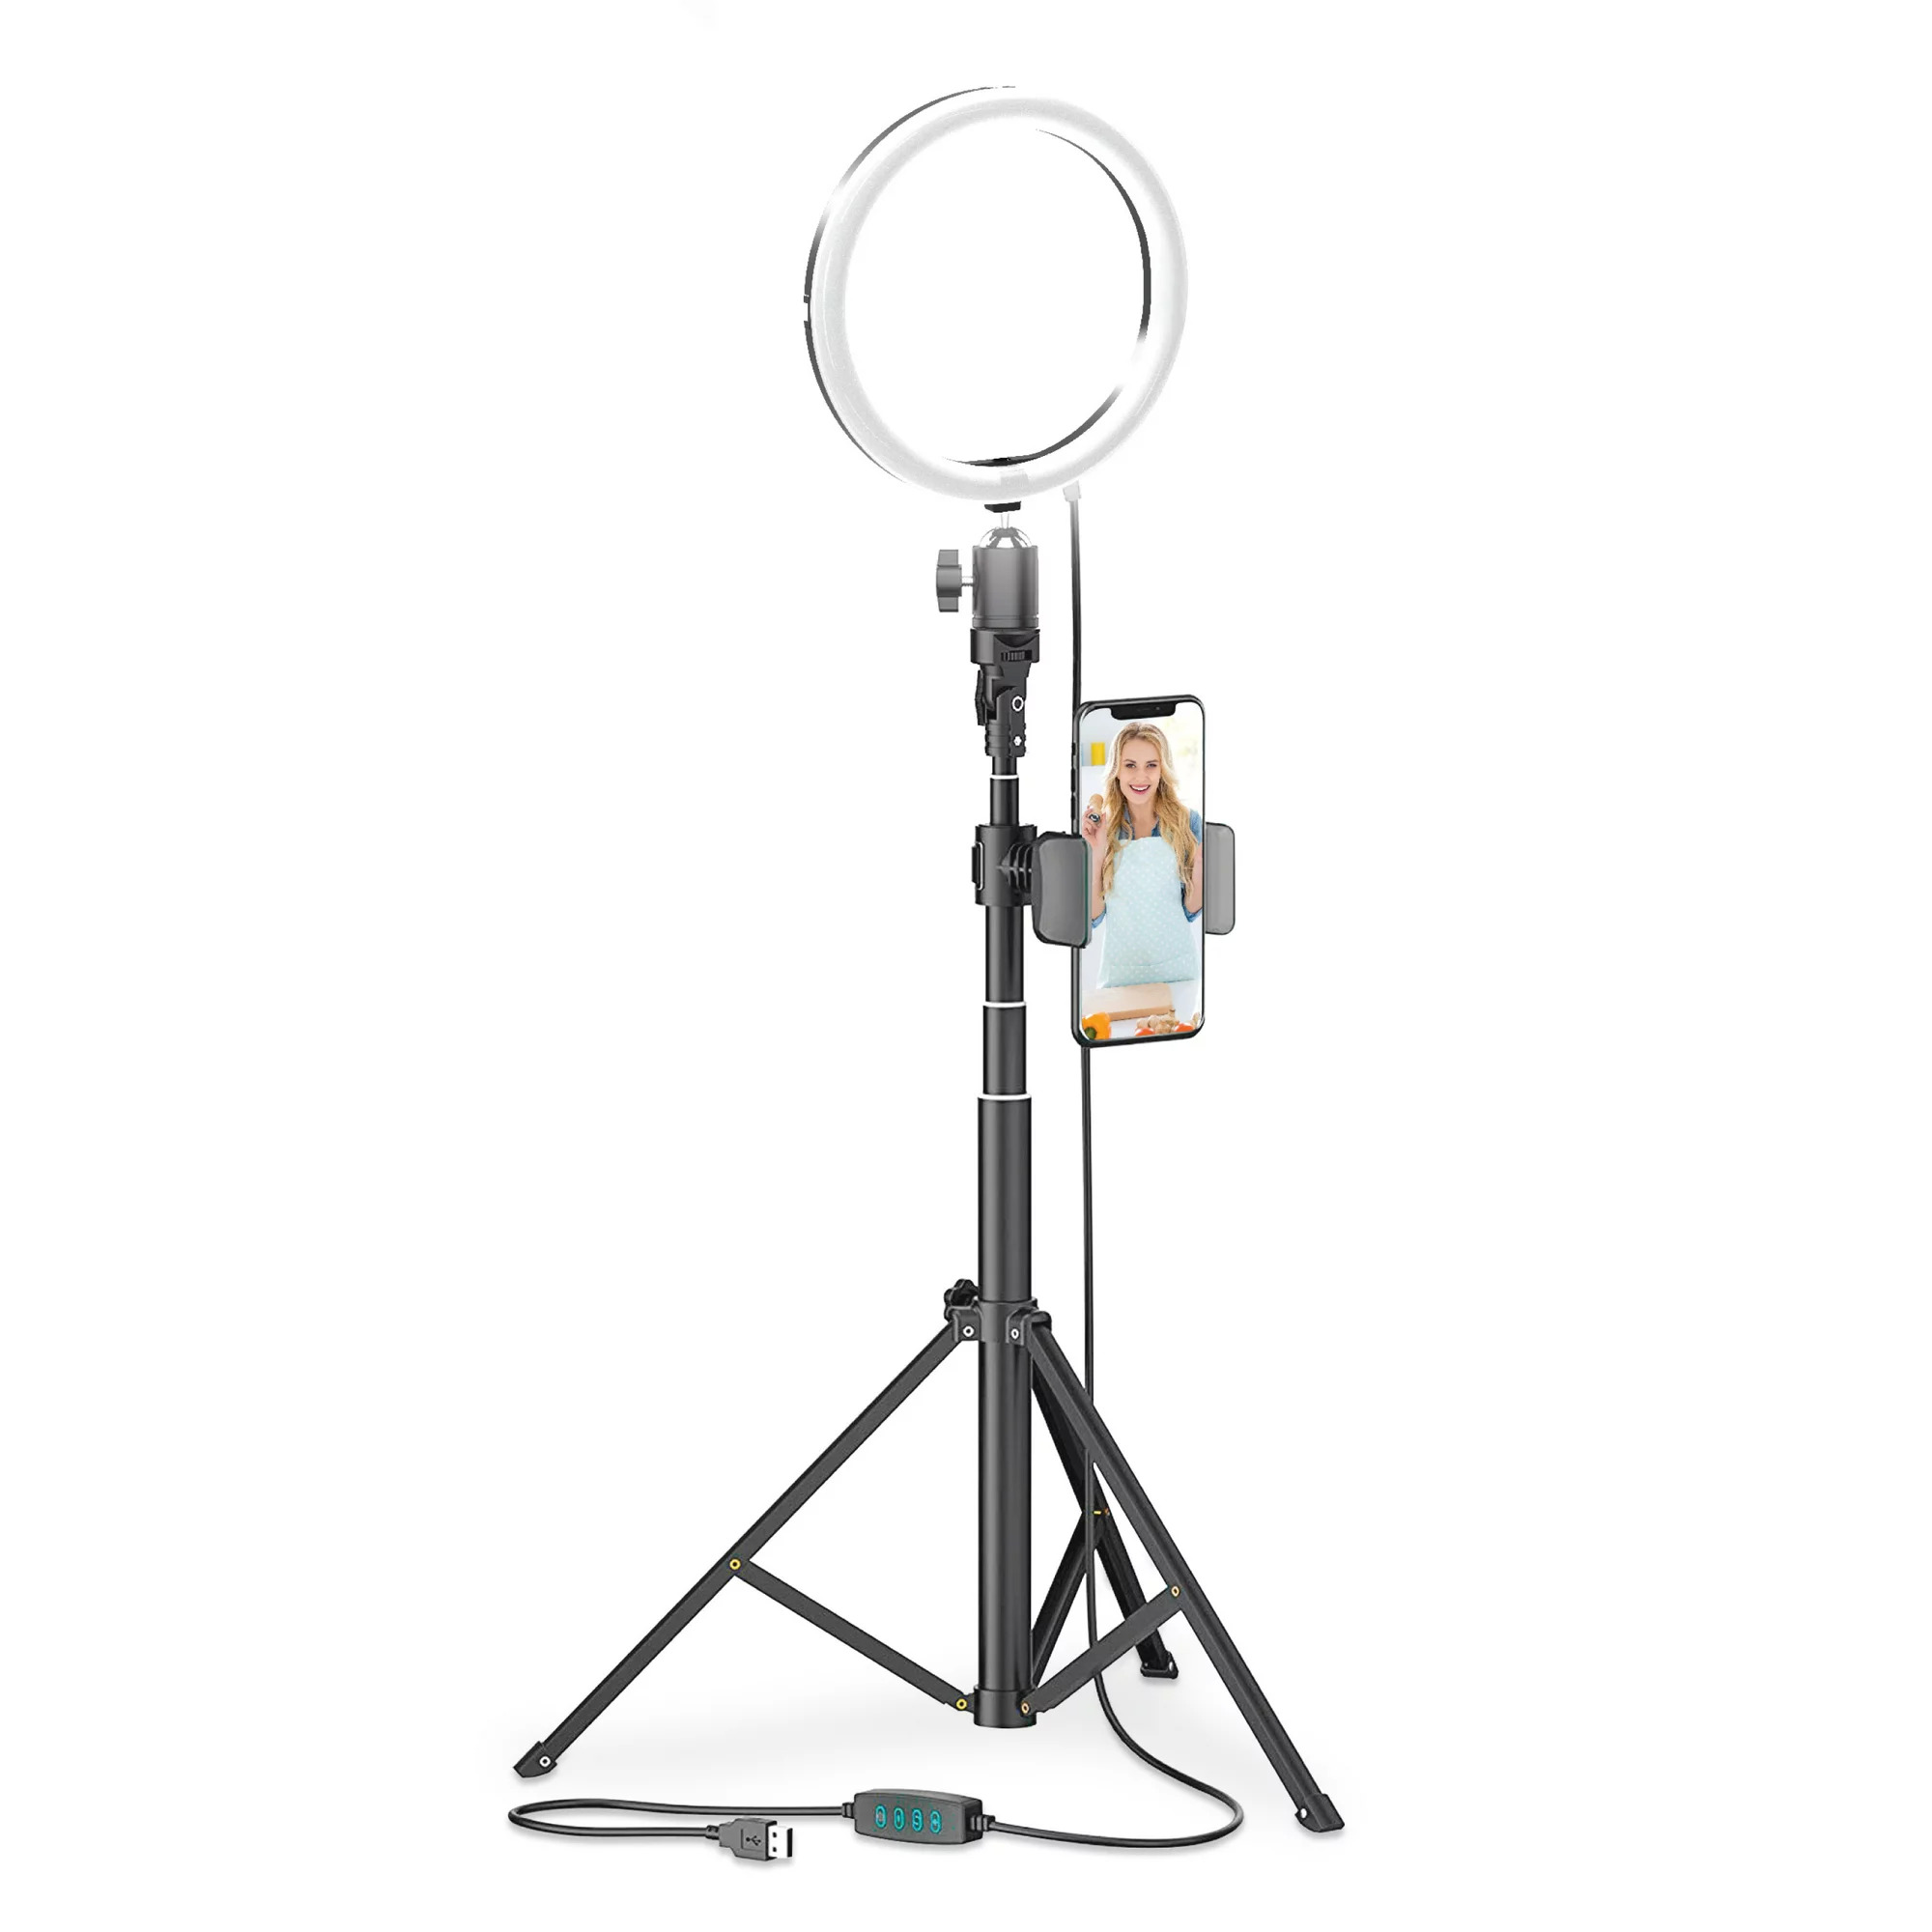 Bower Selfie Ring Light Studio w/ Tripod & Wireless Remote: 8" Ring Light $10, 12" Ring Light $13 + Free S&H w/ Walmart+ or $35+